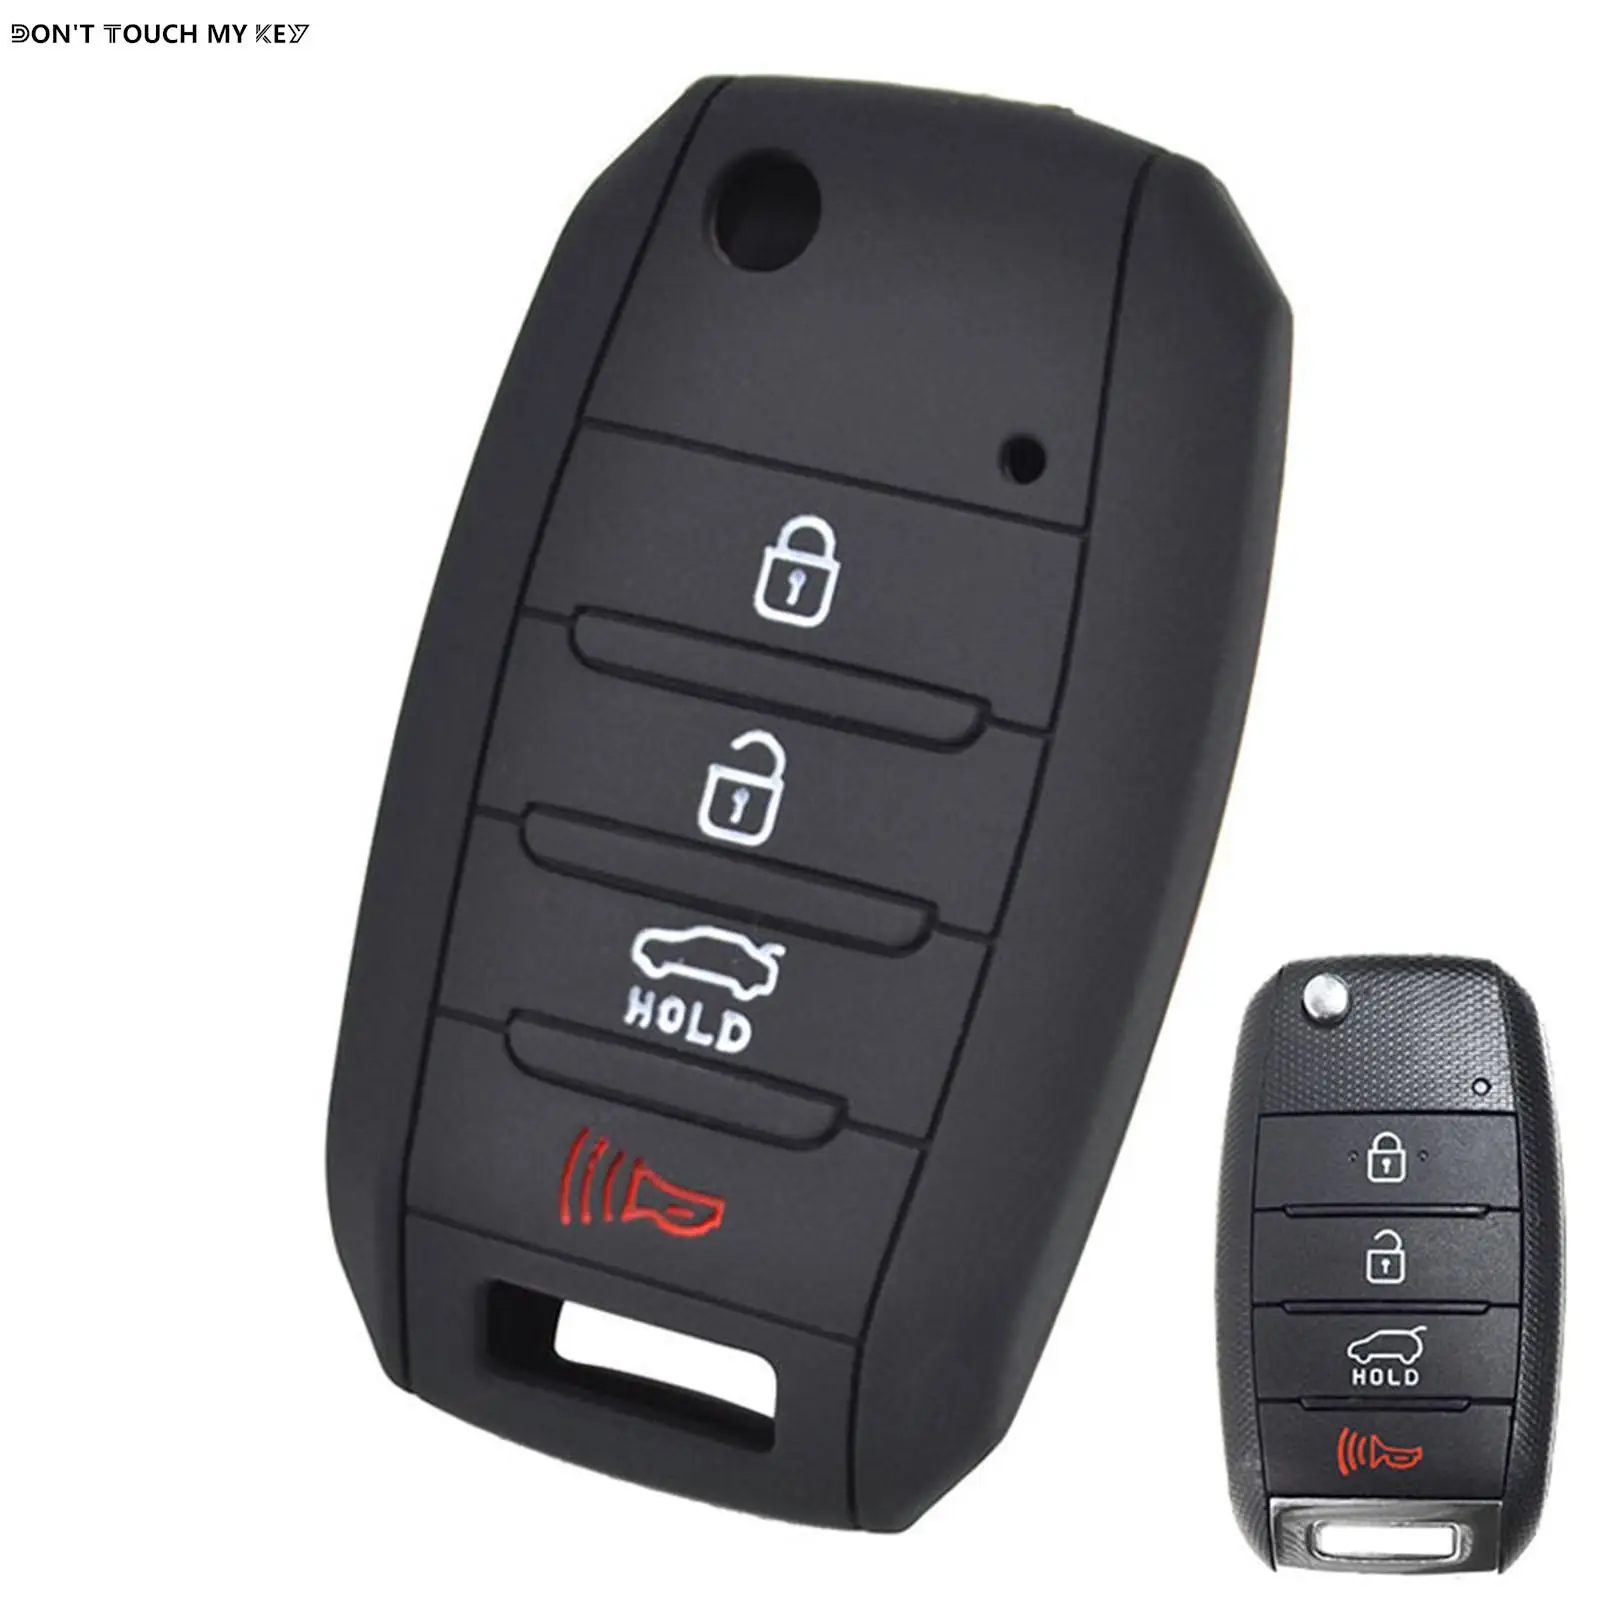 

4 Button Silicone Car Remote Key Case Fob Shell Cover For Kia Sedona Optima Sportage Sorento Soul Forte Cerato Carens Protector